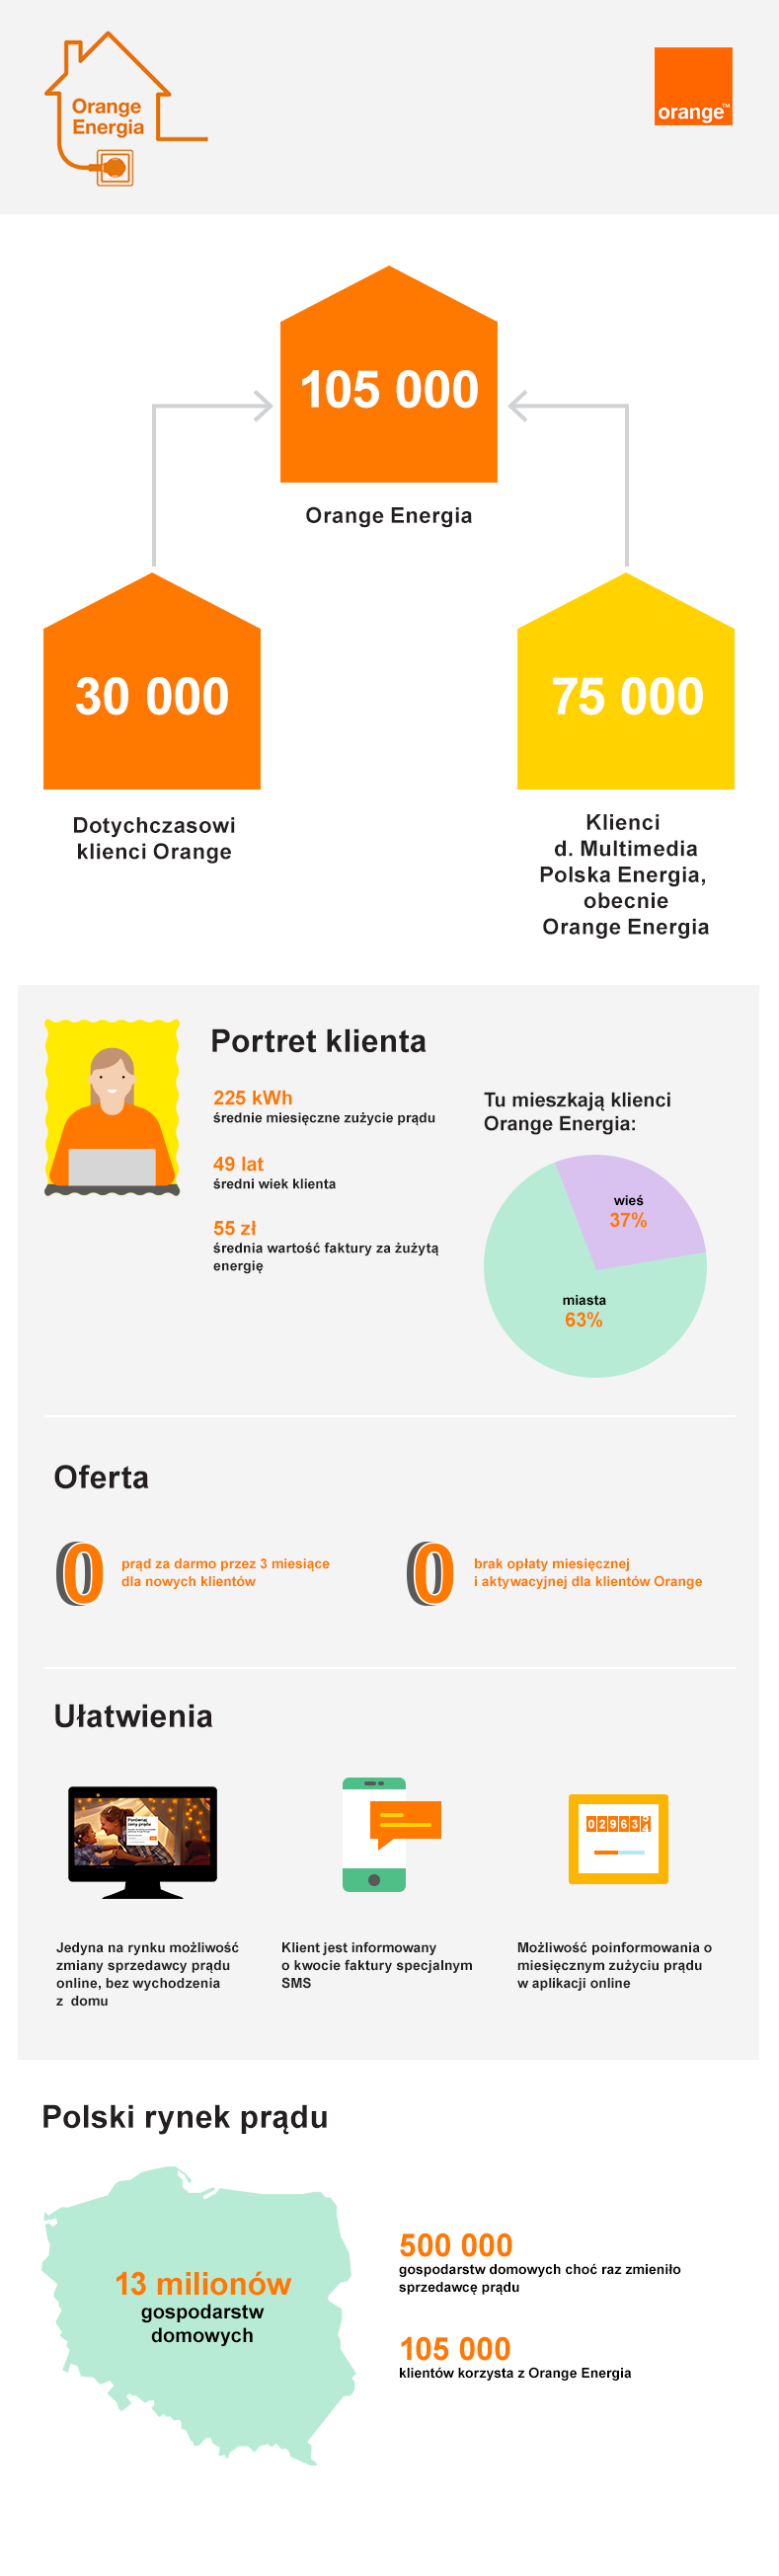 orange-energia-podsumowanie-infografika.png